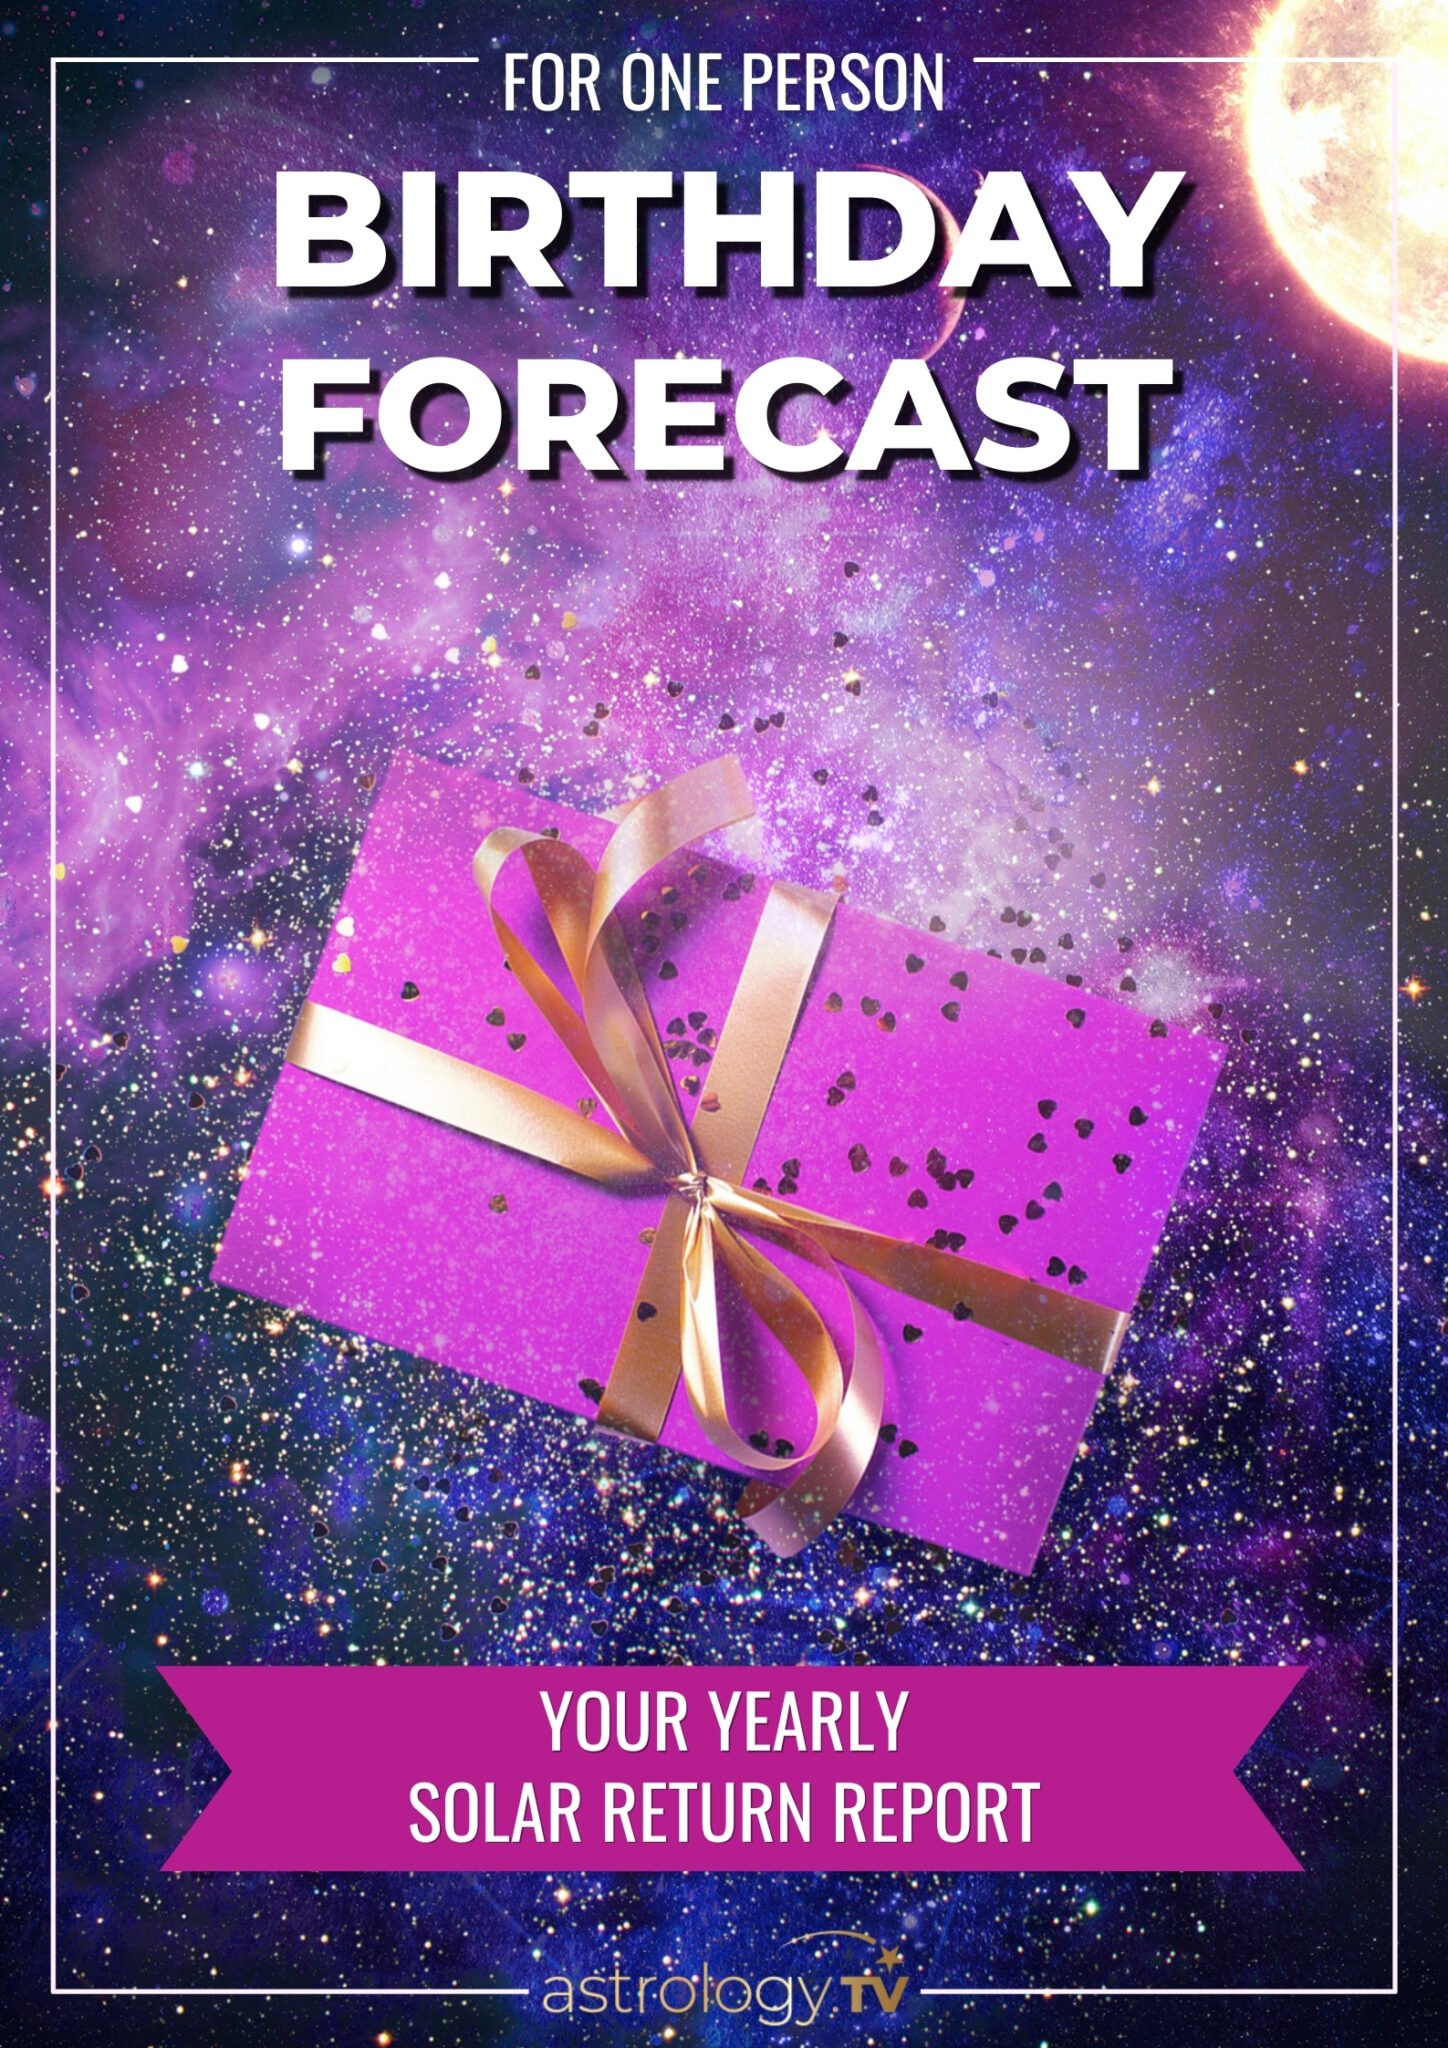 Birthday Forecast by Astrology.TV